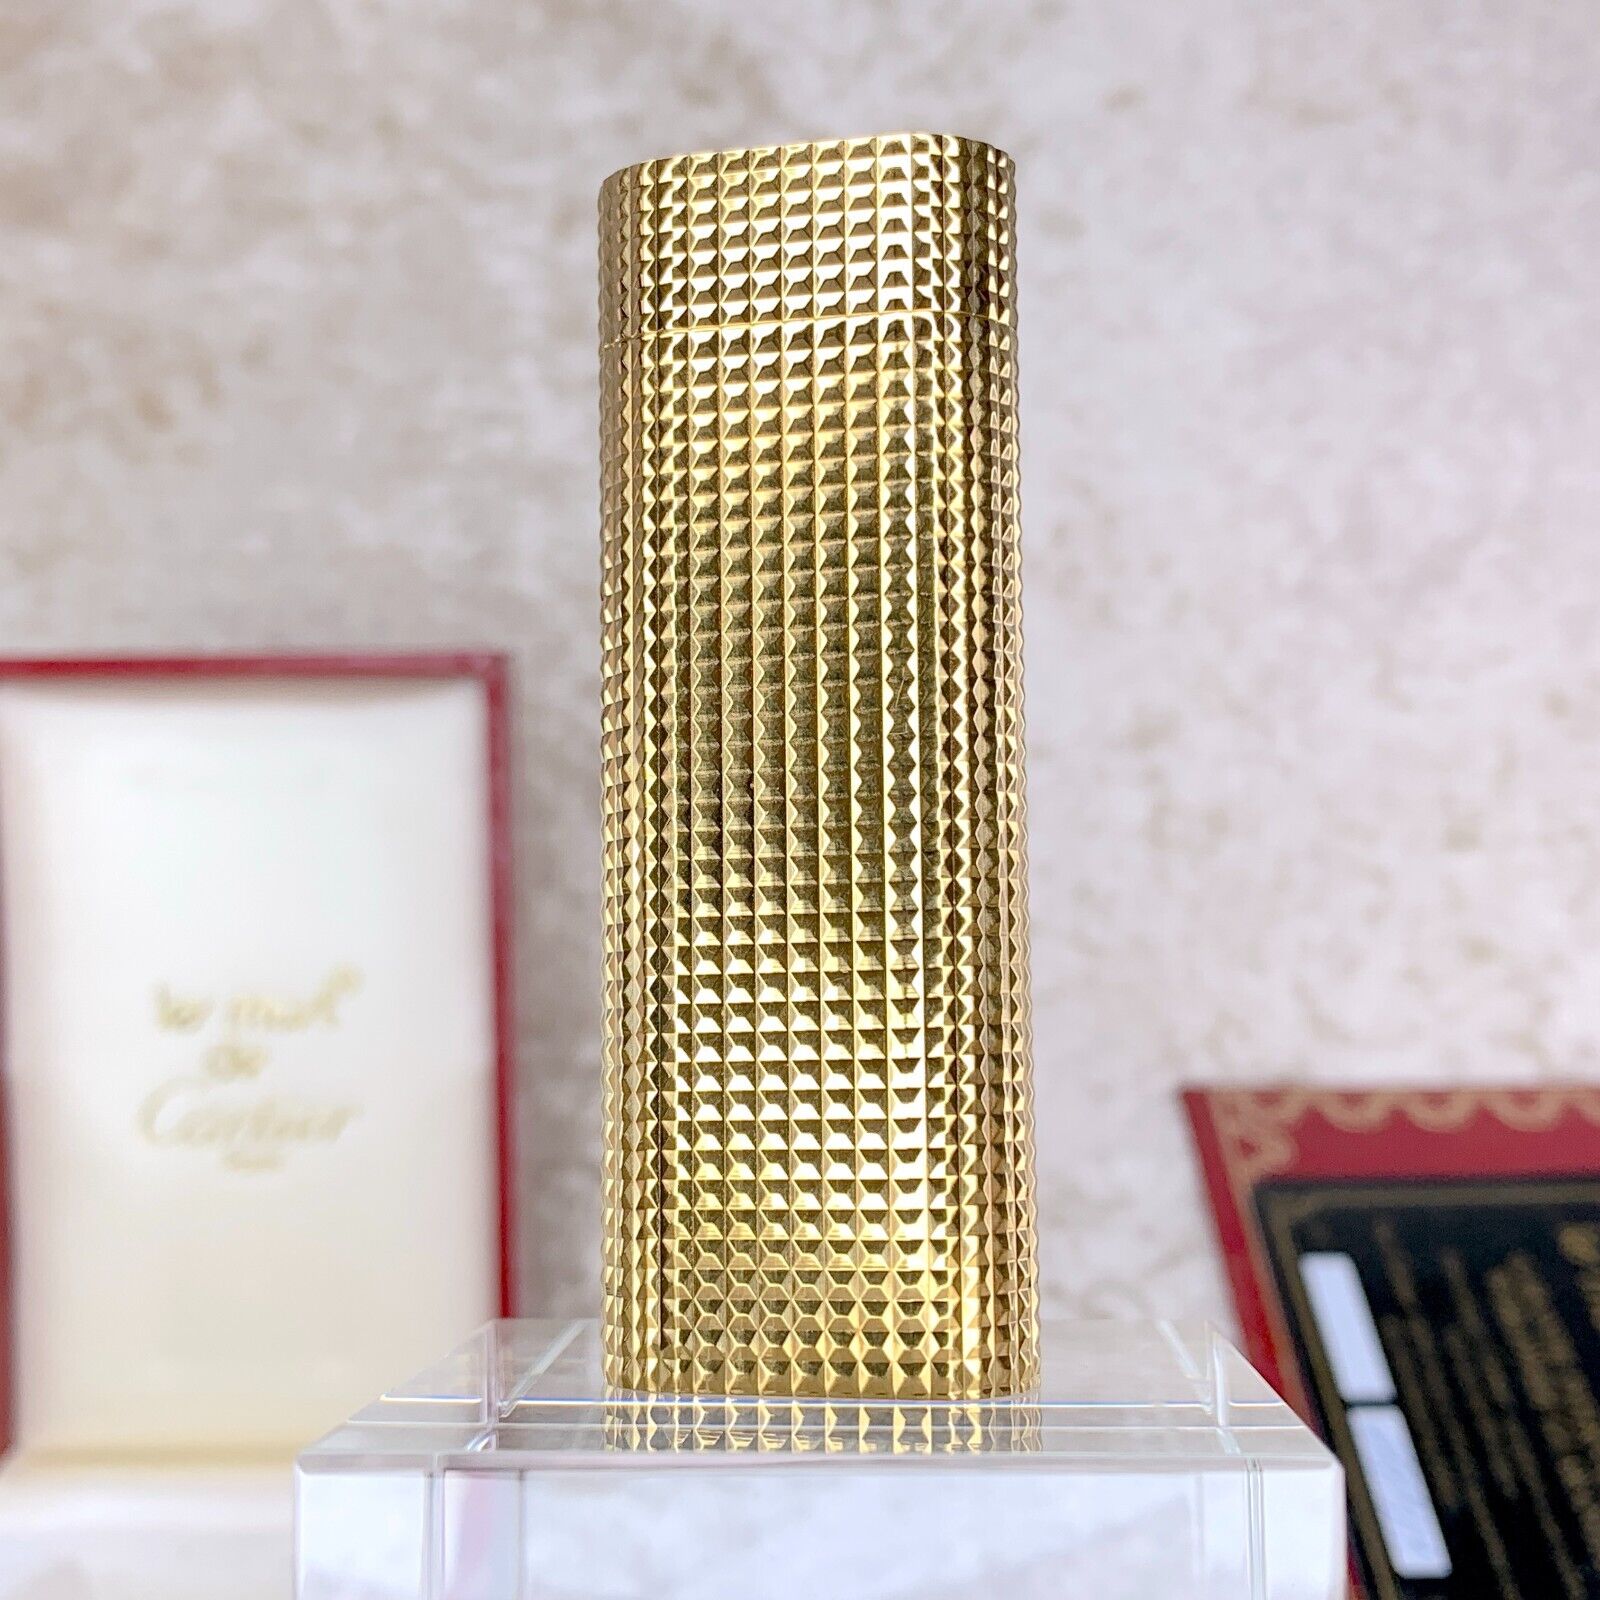 Vintage Cartier Lighter 18K Gold Finish Diamond Cut with Case & Card